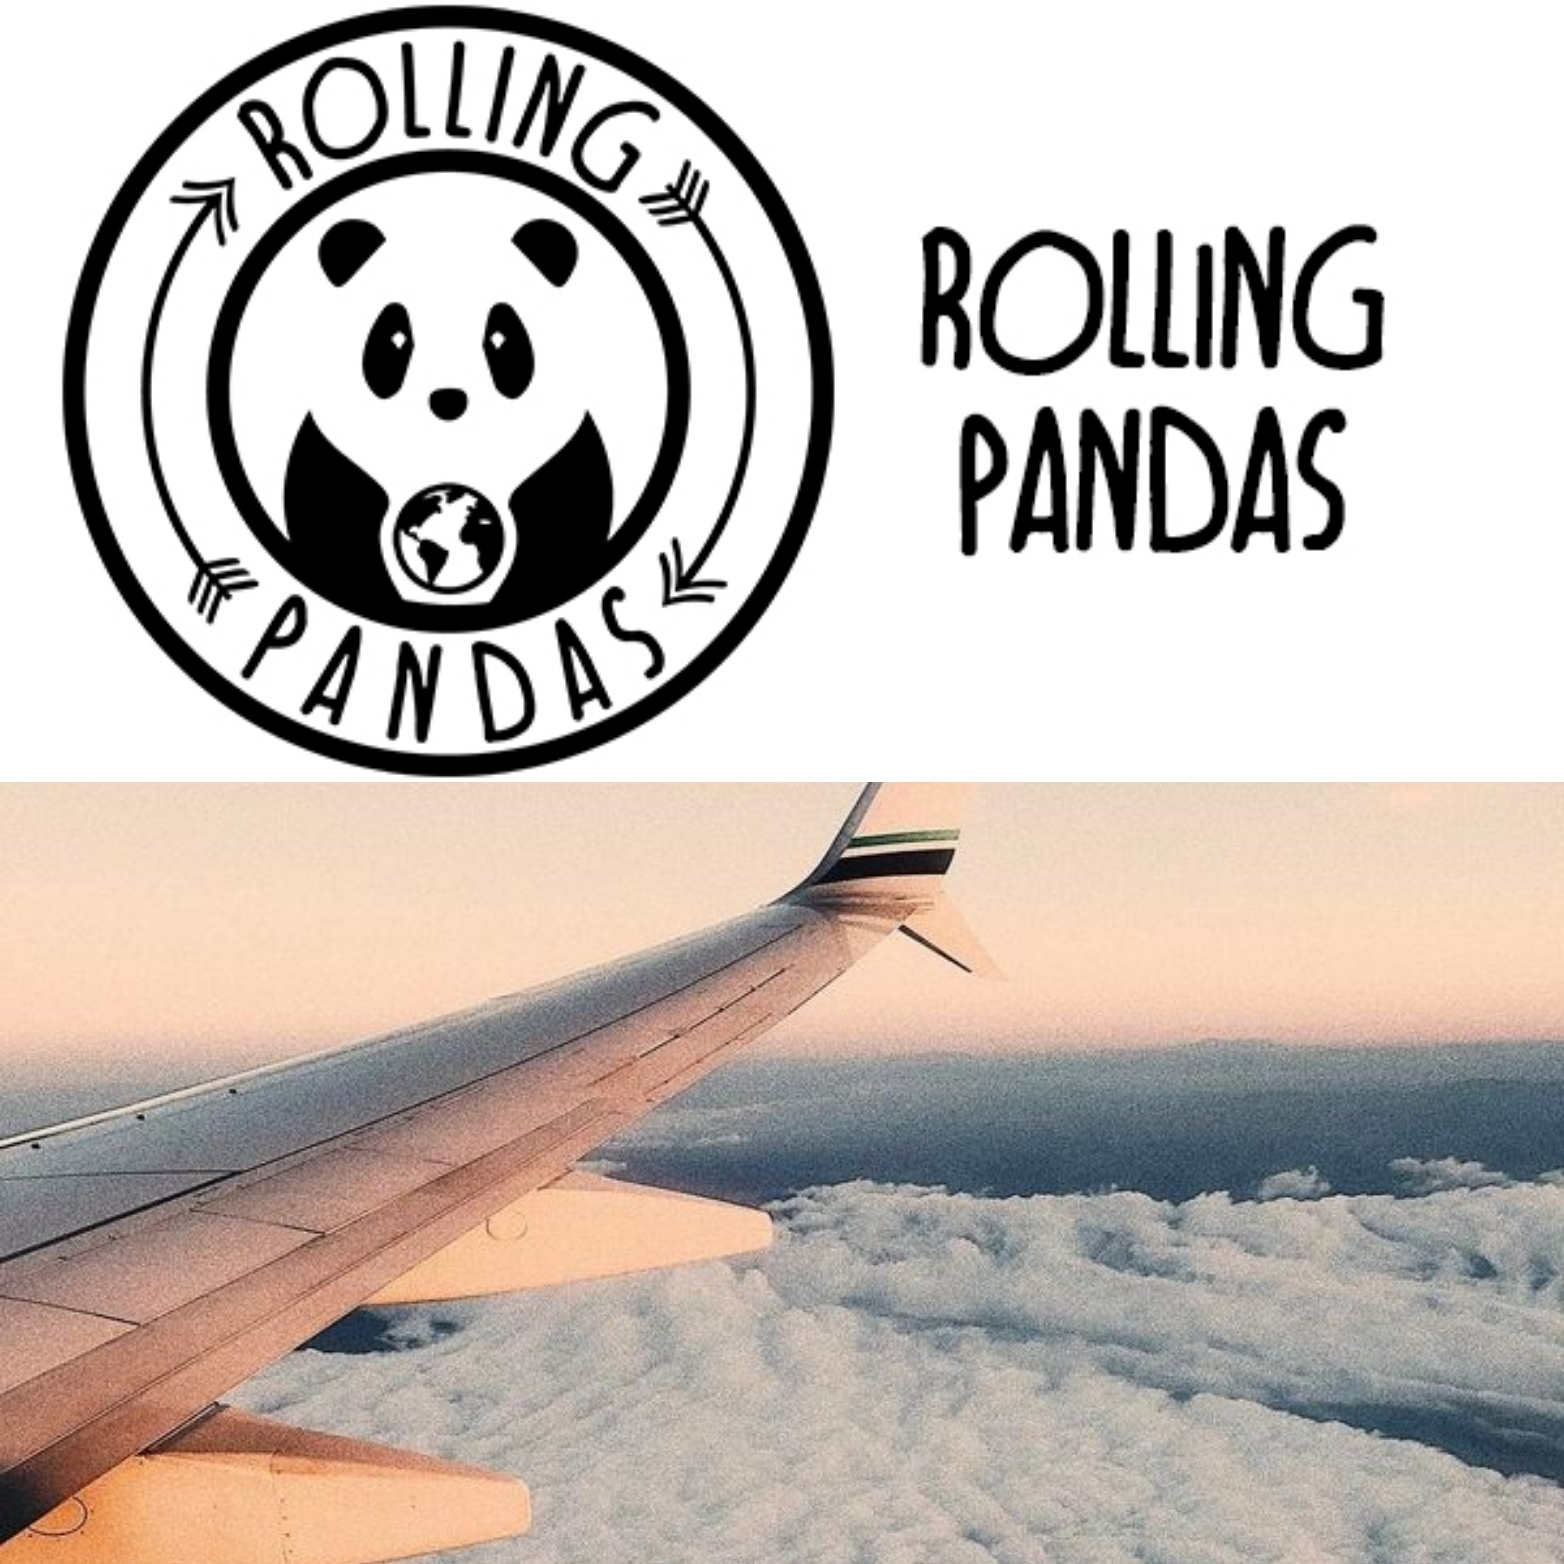 [:it]Where to book trips? Rolling Pandas[:]